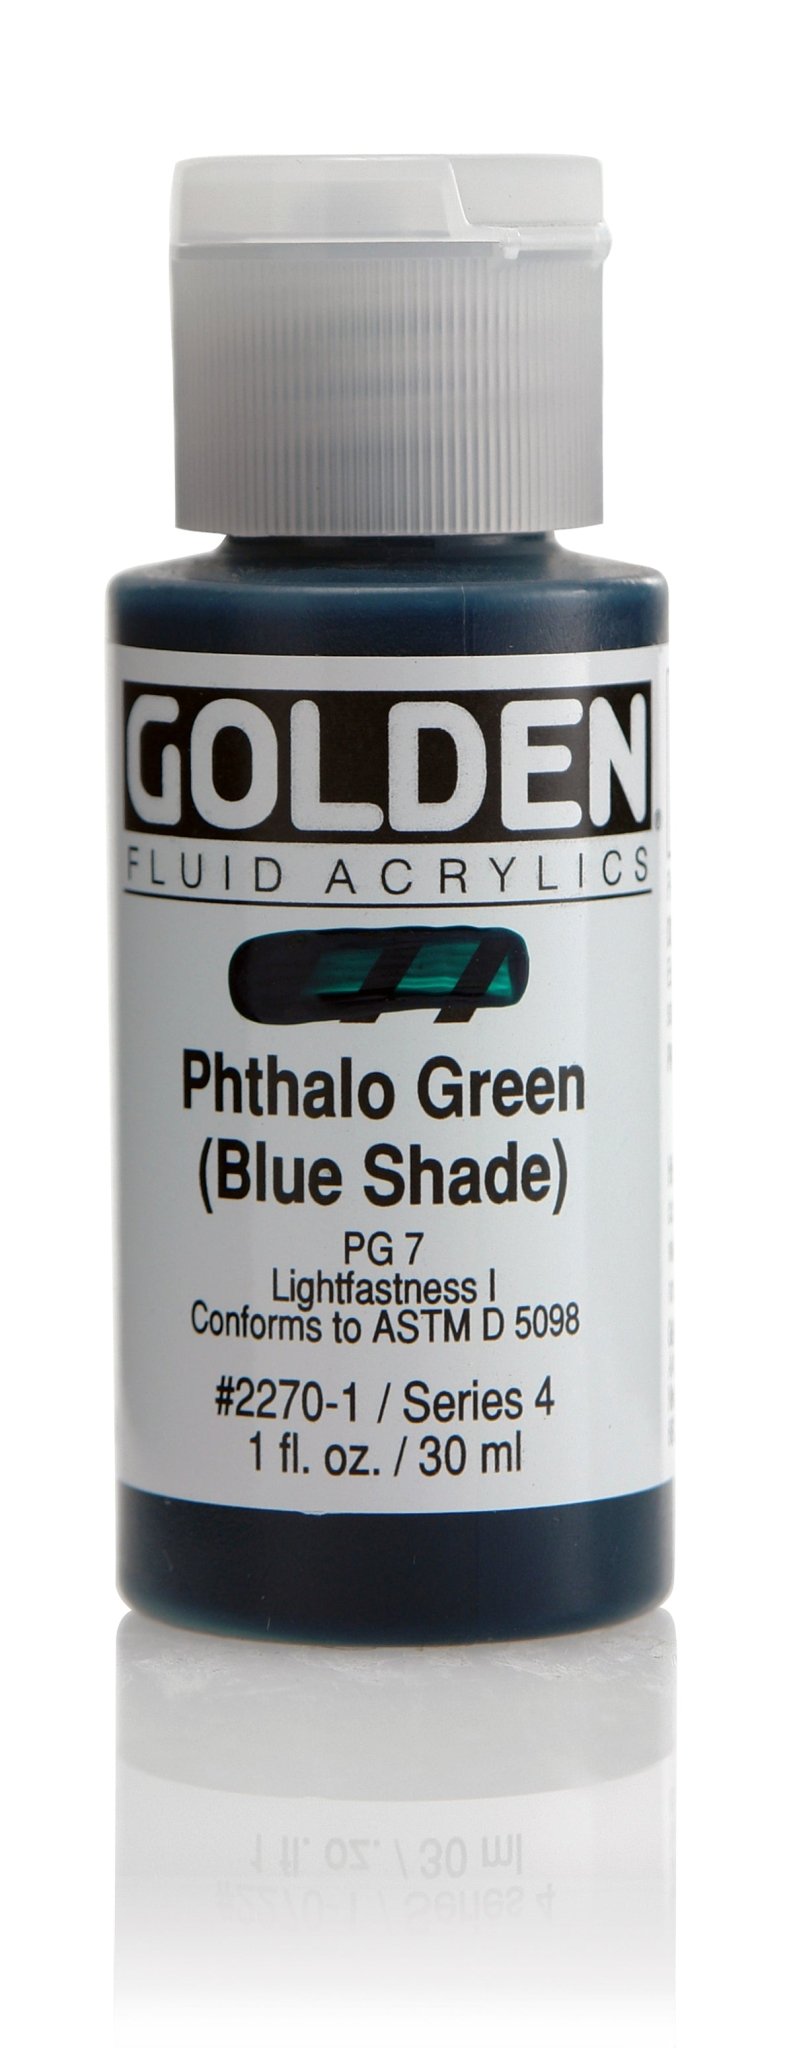 Golden Fluid Acrylics - Phthalo Green (Blue Shade) - 30ml - Create A Little Magic (Pty) Ltd